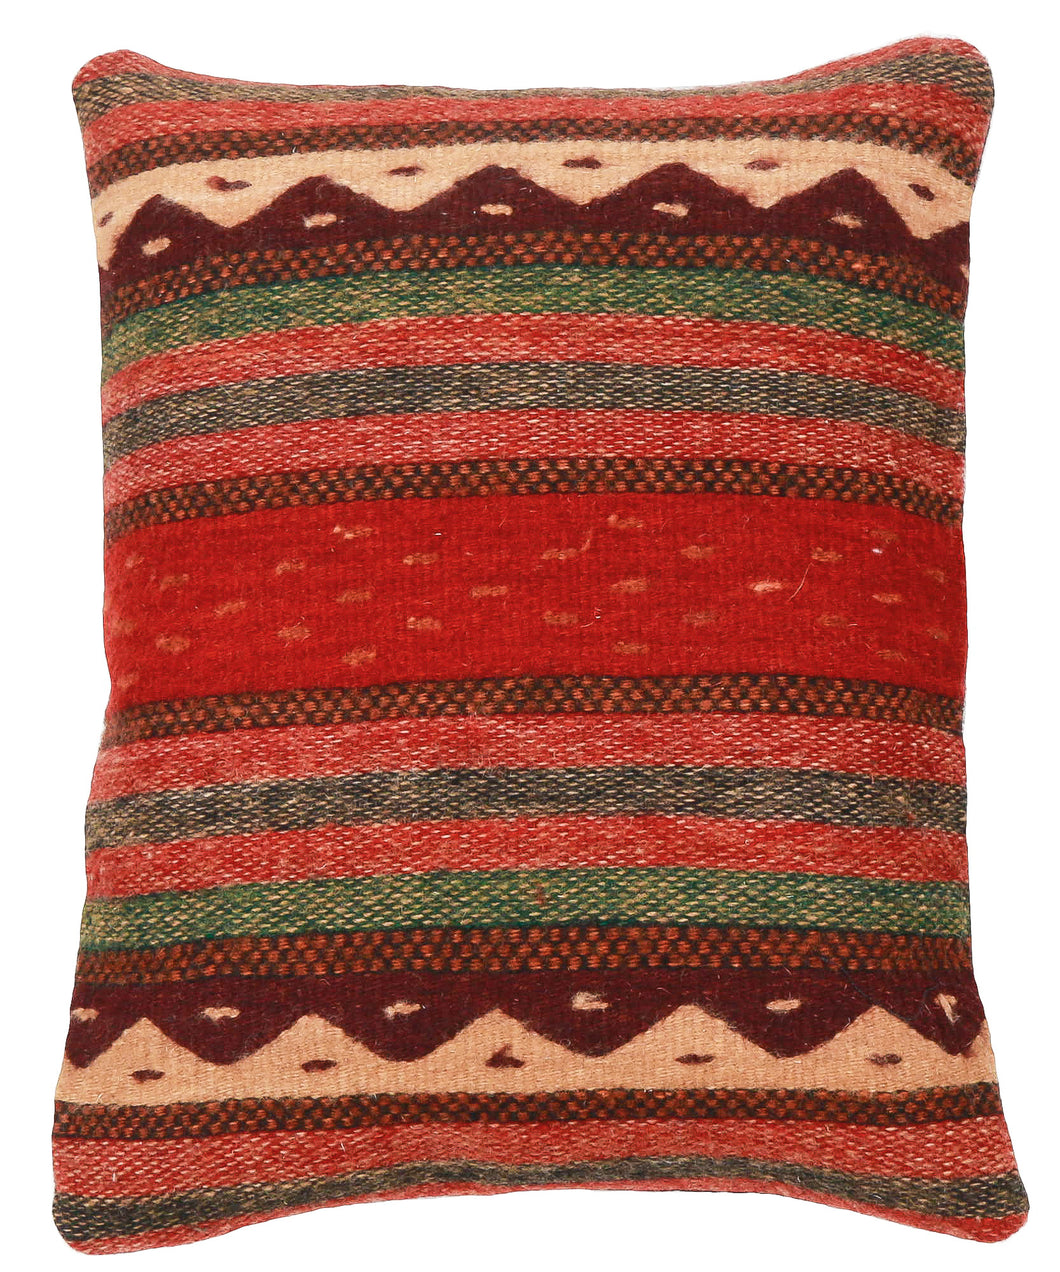 Handwoven Zapotec Indian Pillow - Montanitas Wool Oaxacan Textile